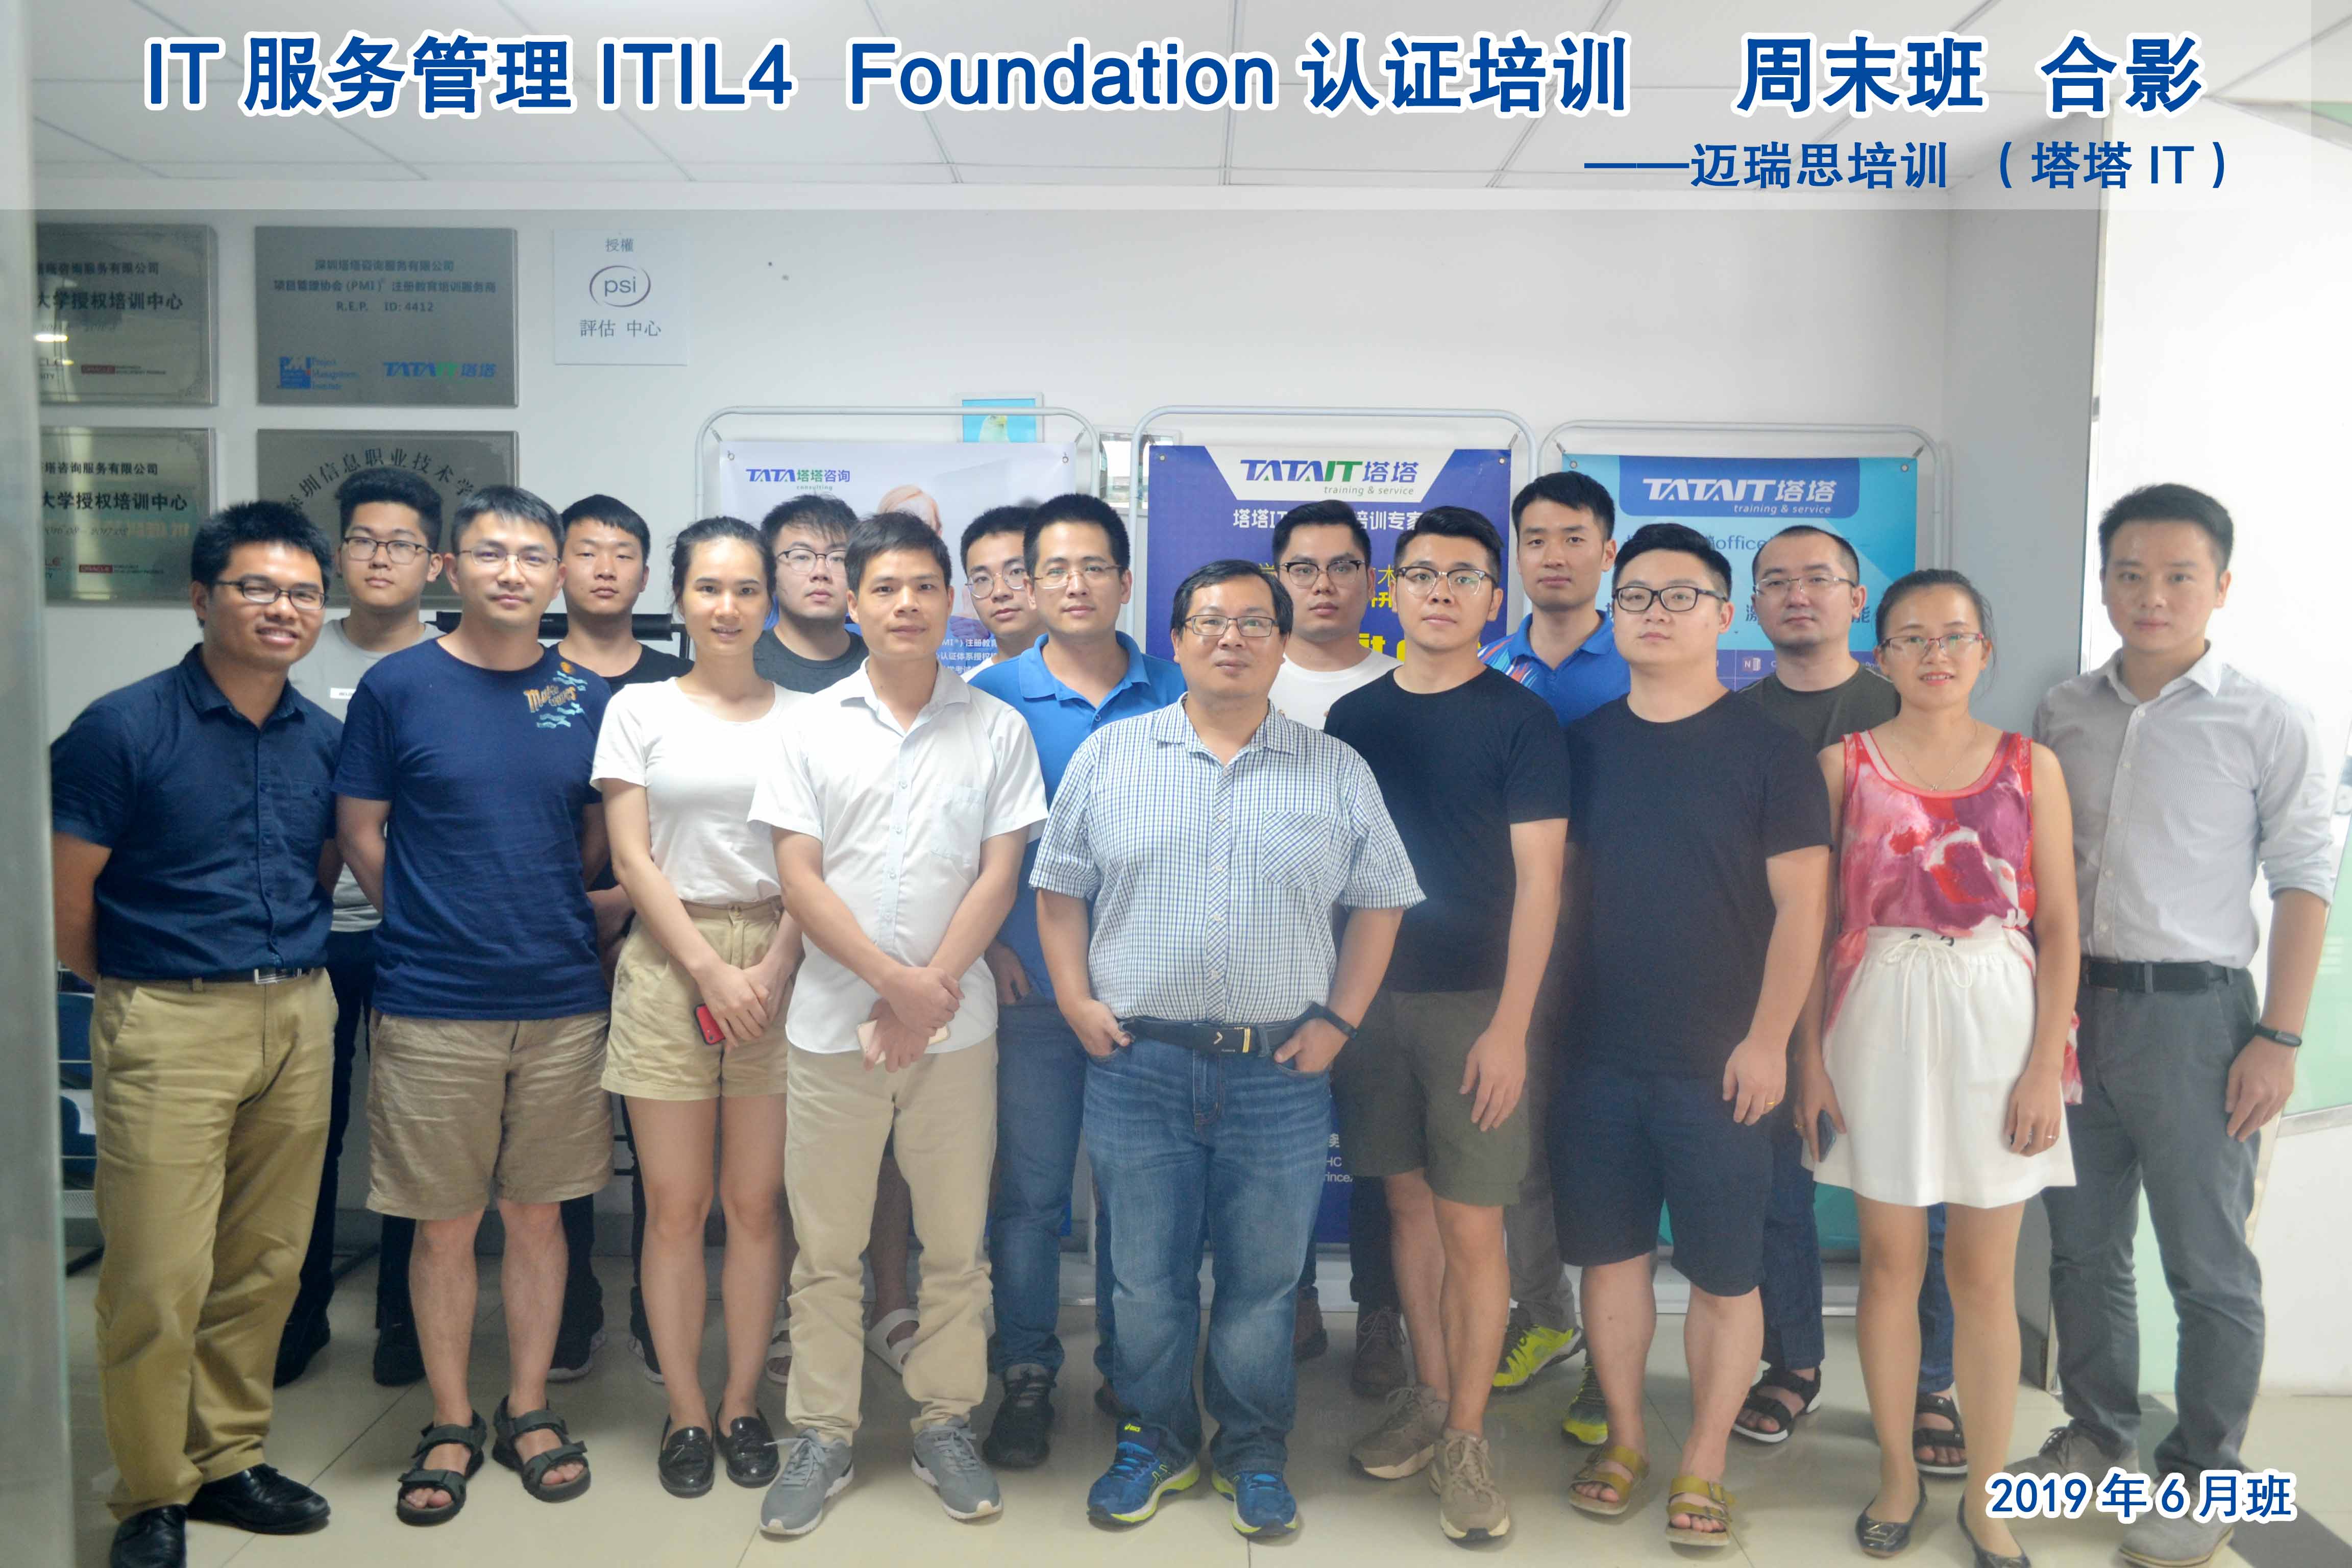 2019年6月班ITIL4 Foundation认证培训合影